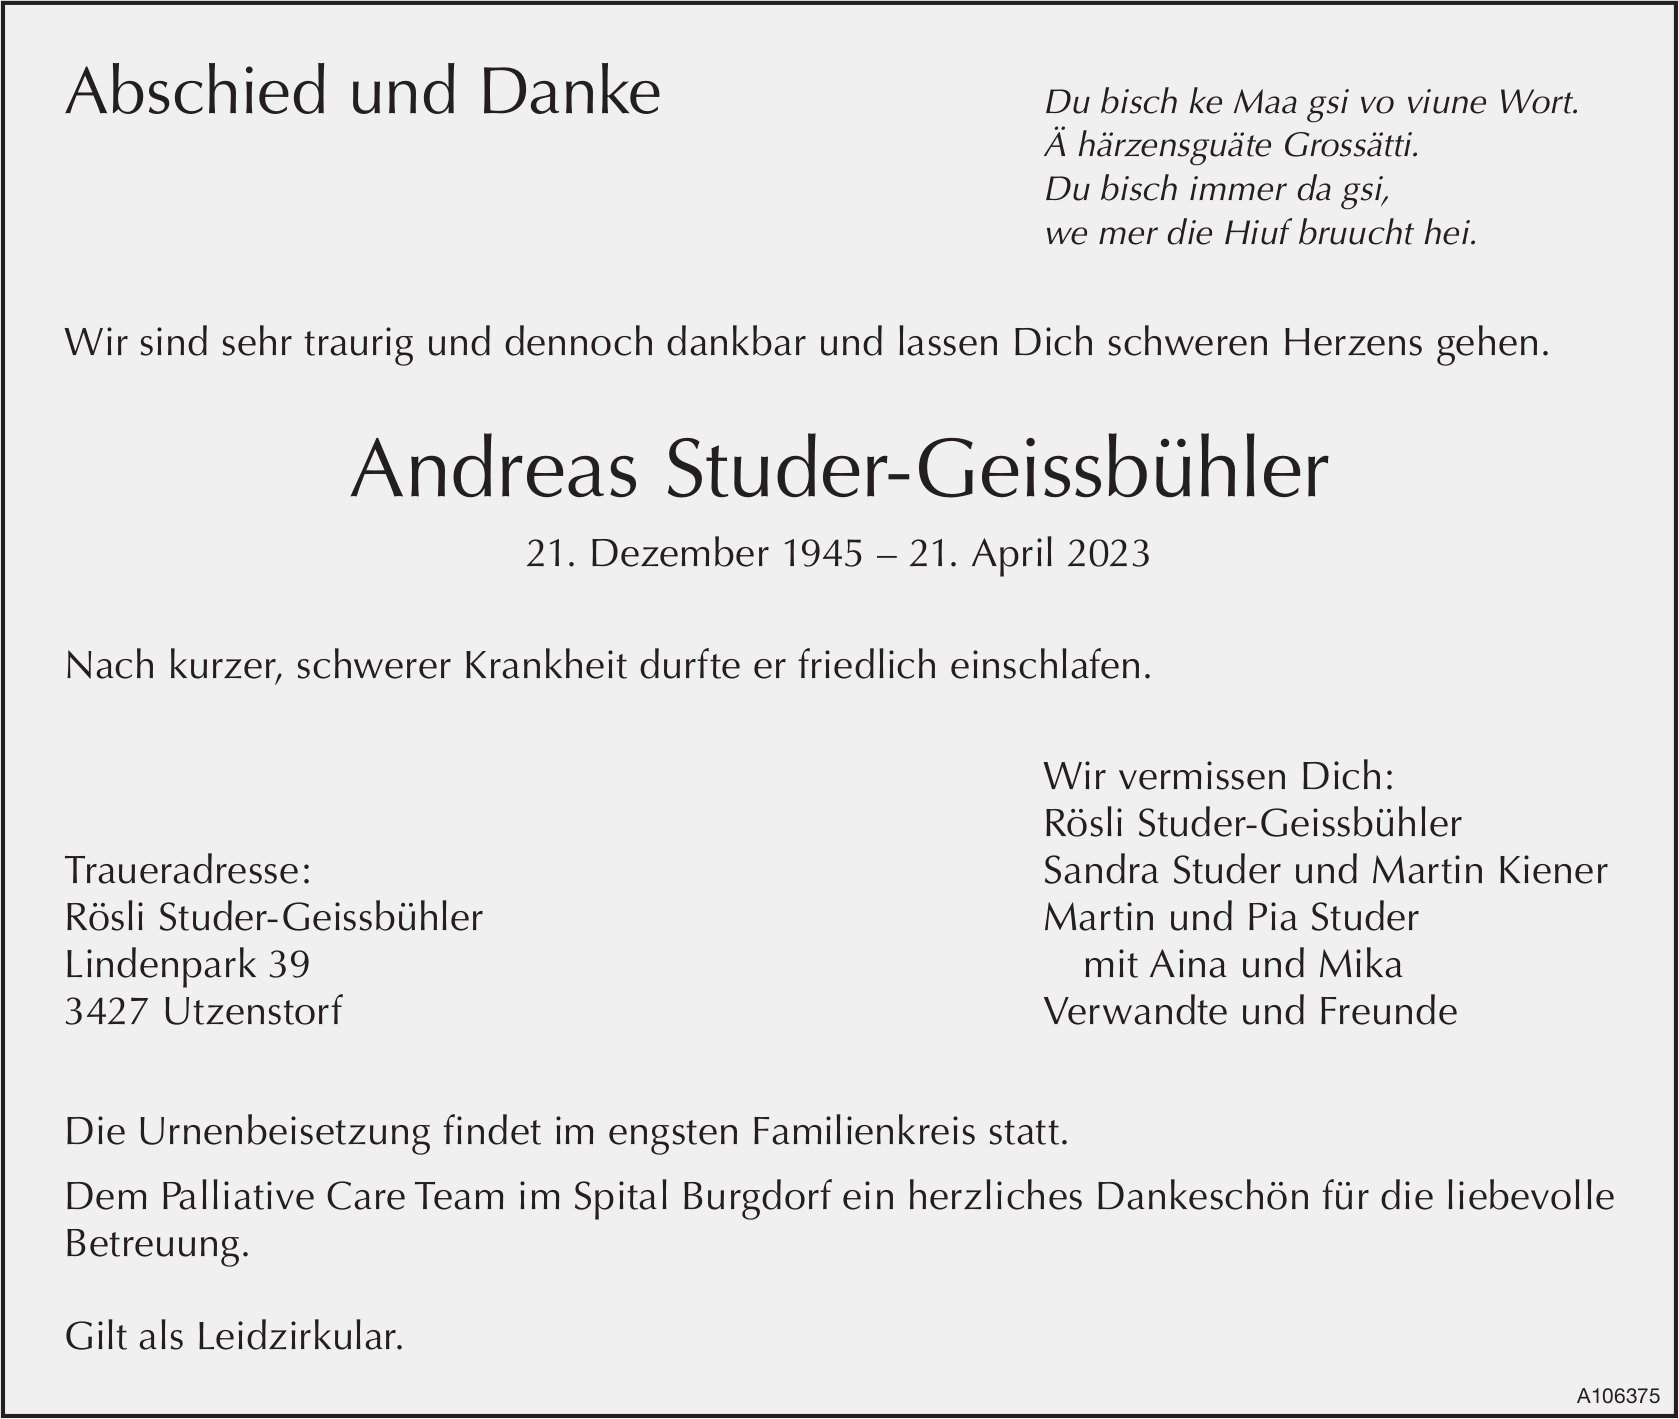 Andreas Studer-Geissbühler, April 2023 / TA